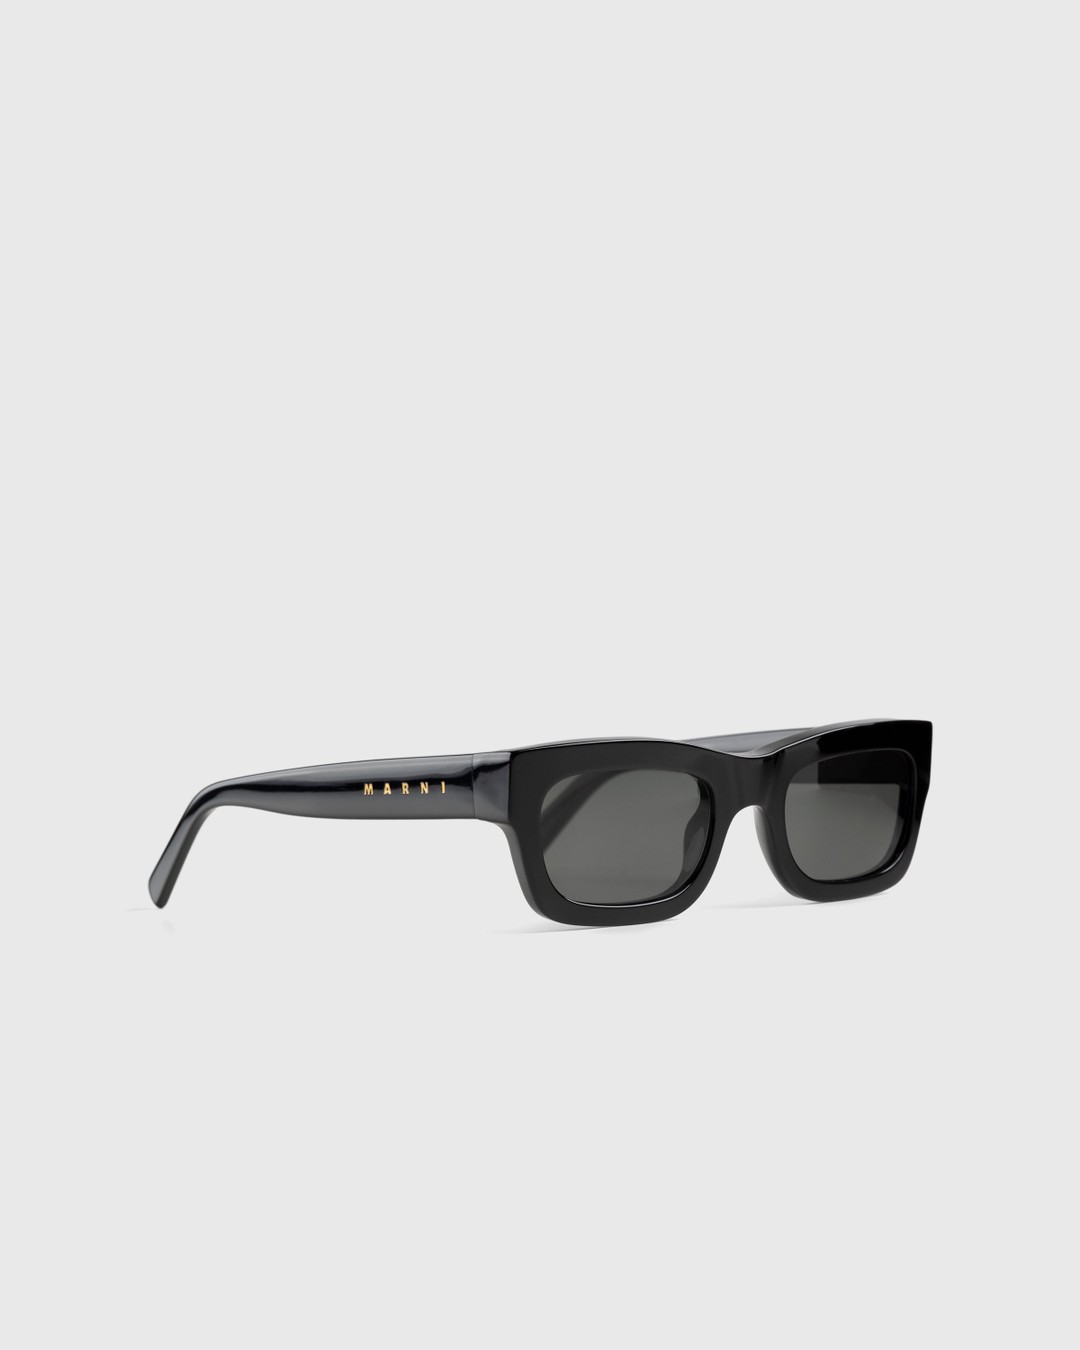 Marni – Kawasan Falls Sunglasses Black - Sunglasses - Black - Image 2